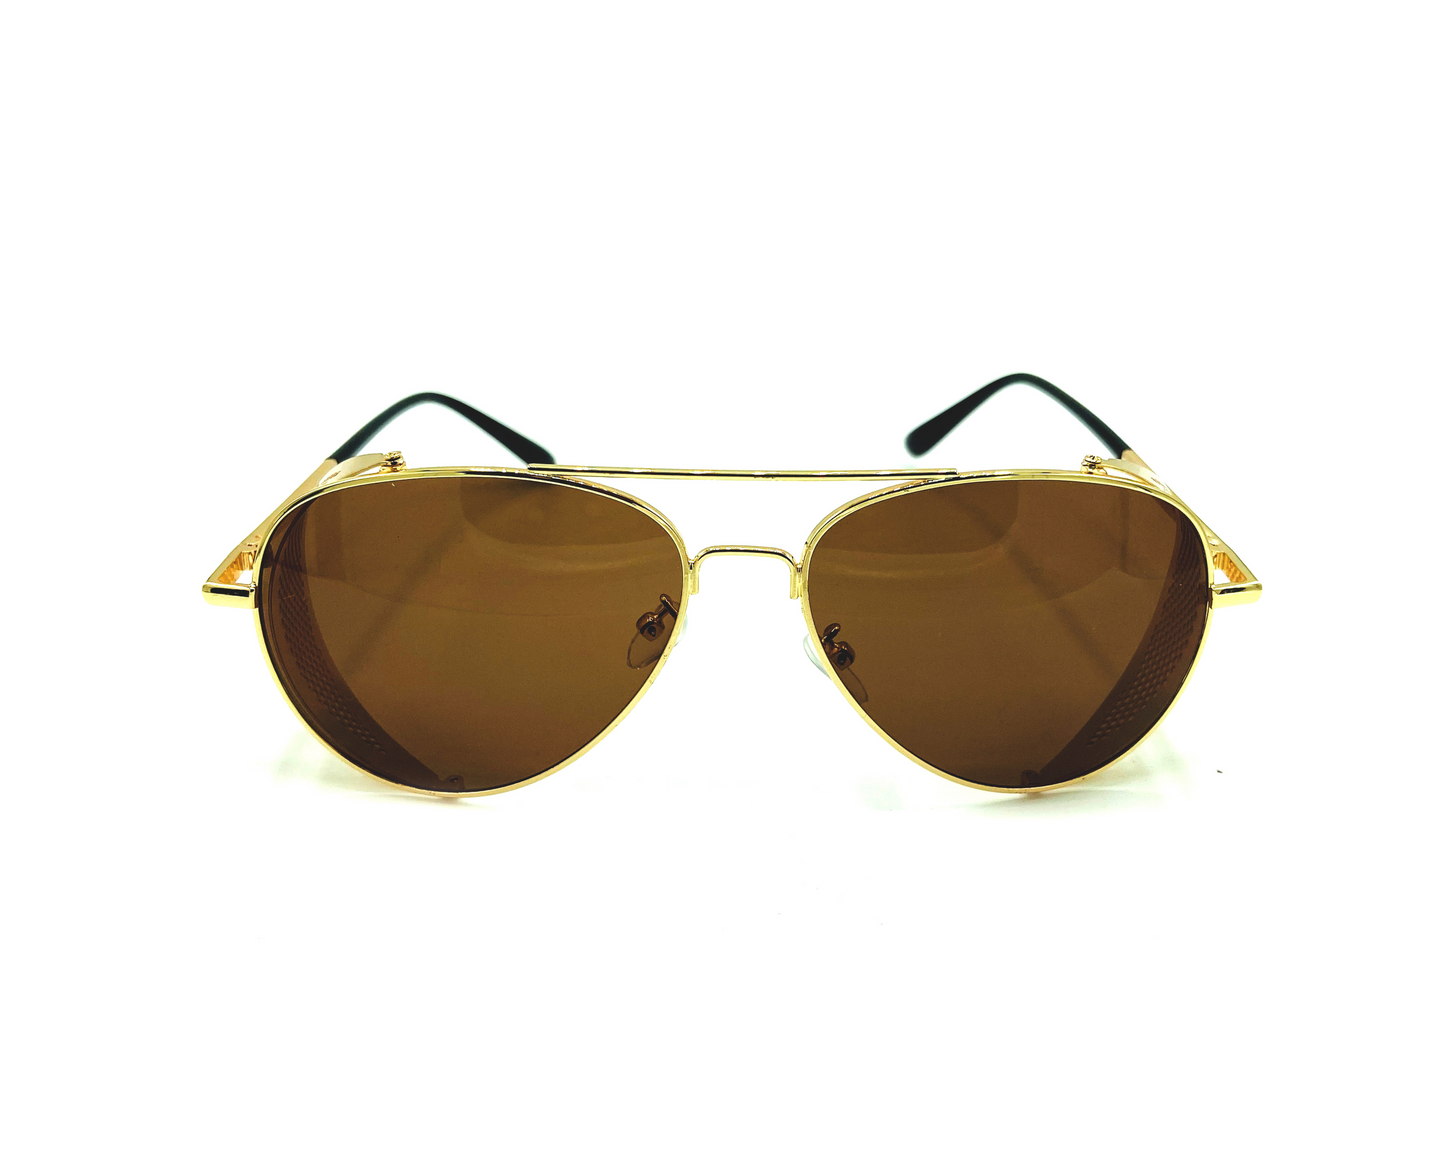 NS Classic - 002 - Golden - Sunglasses